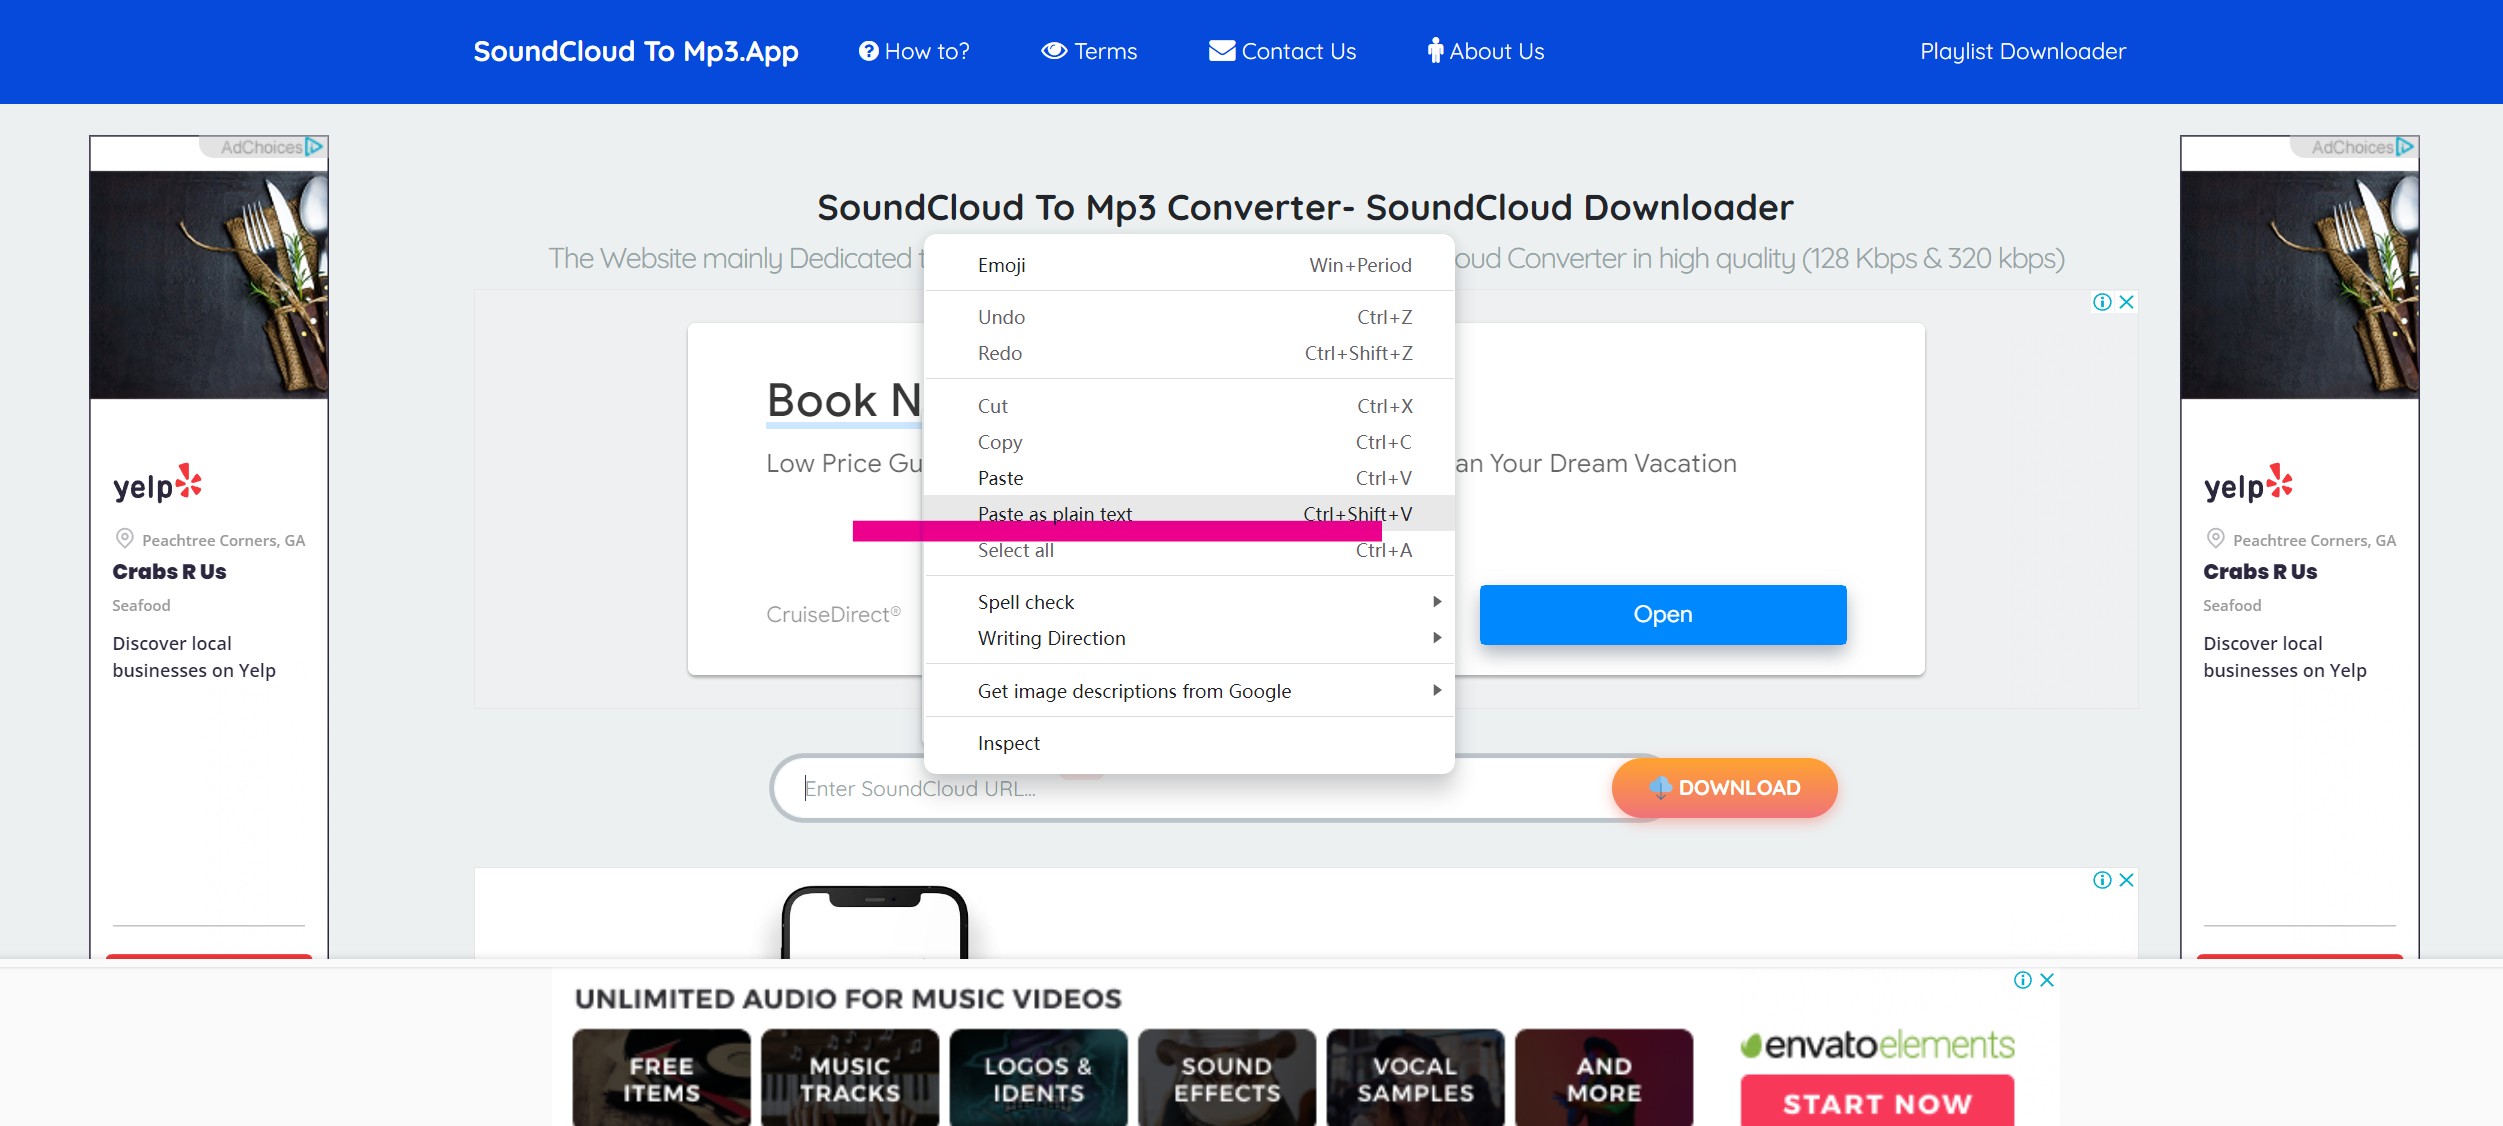 Stream 2996  Listen to dfgdfg playlist online for free on SoundCloud